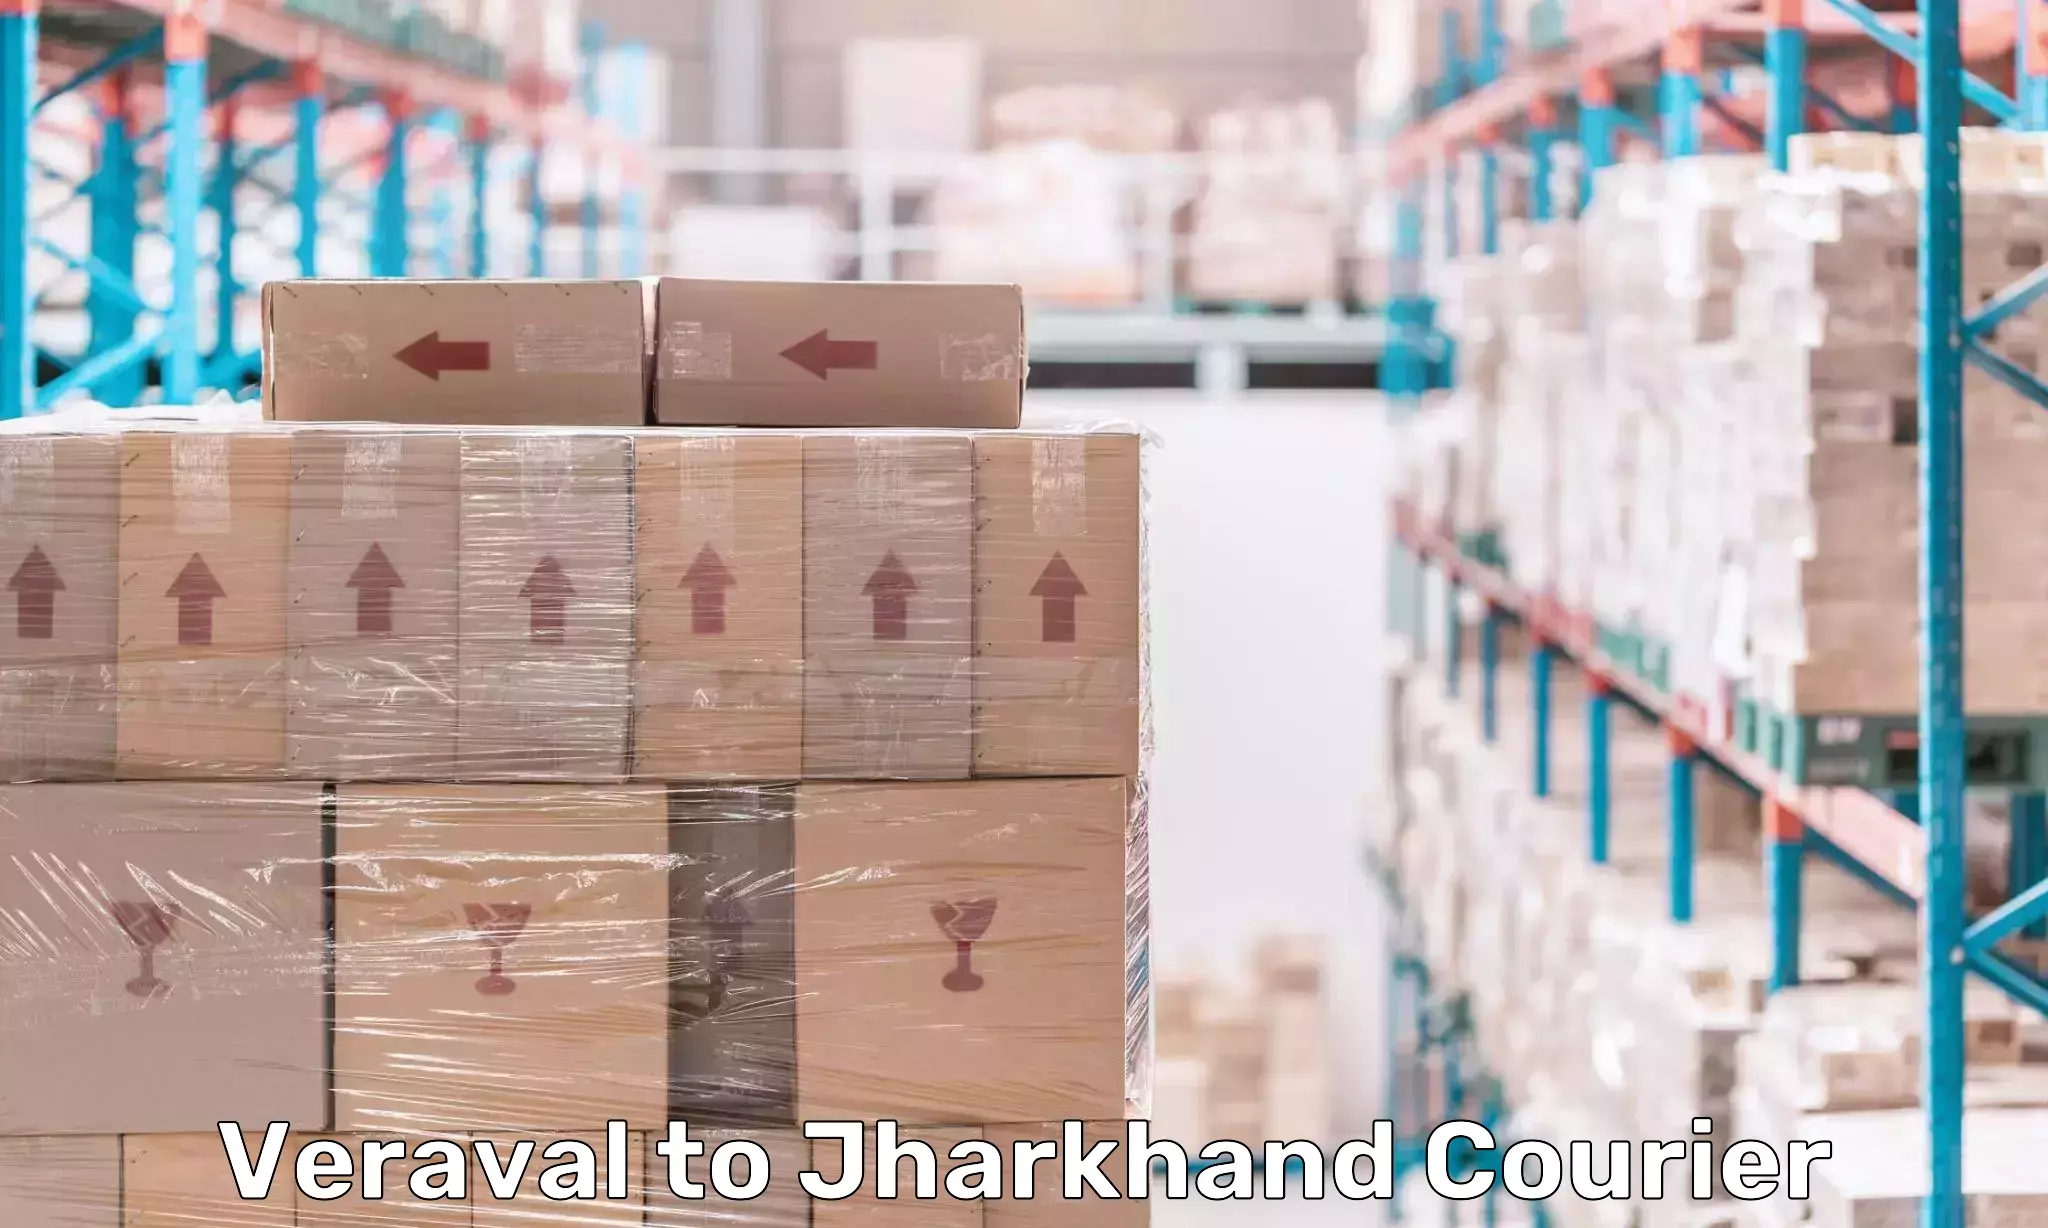 High-priority parcel service Veraval to Jamshedpur